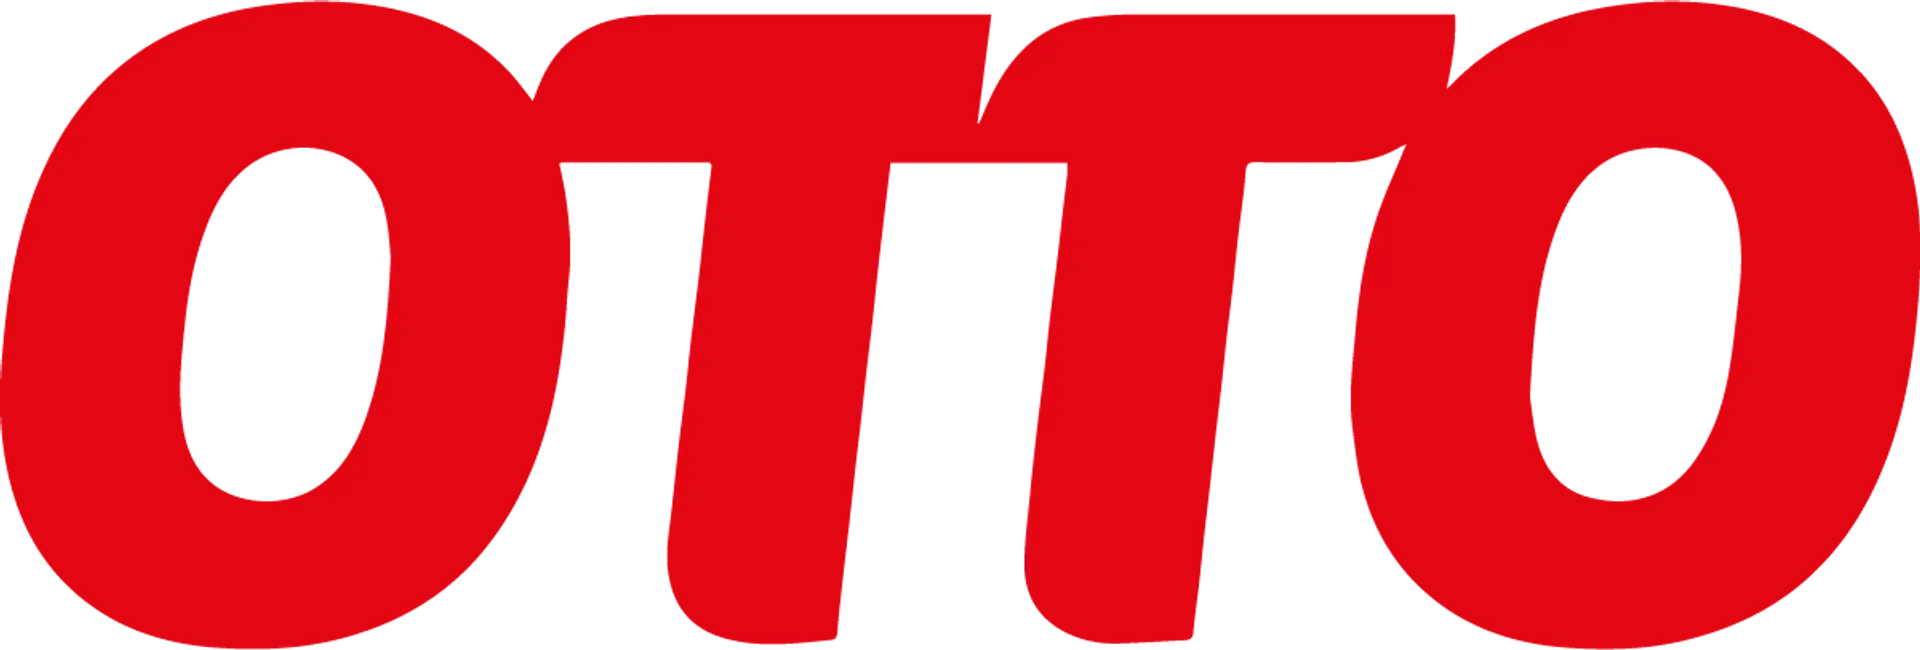 OTTO logo die aktuell Flugblatt